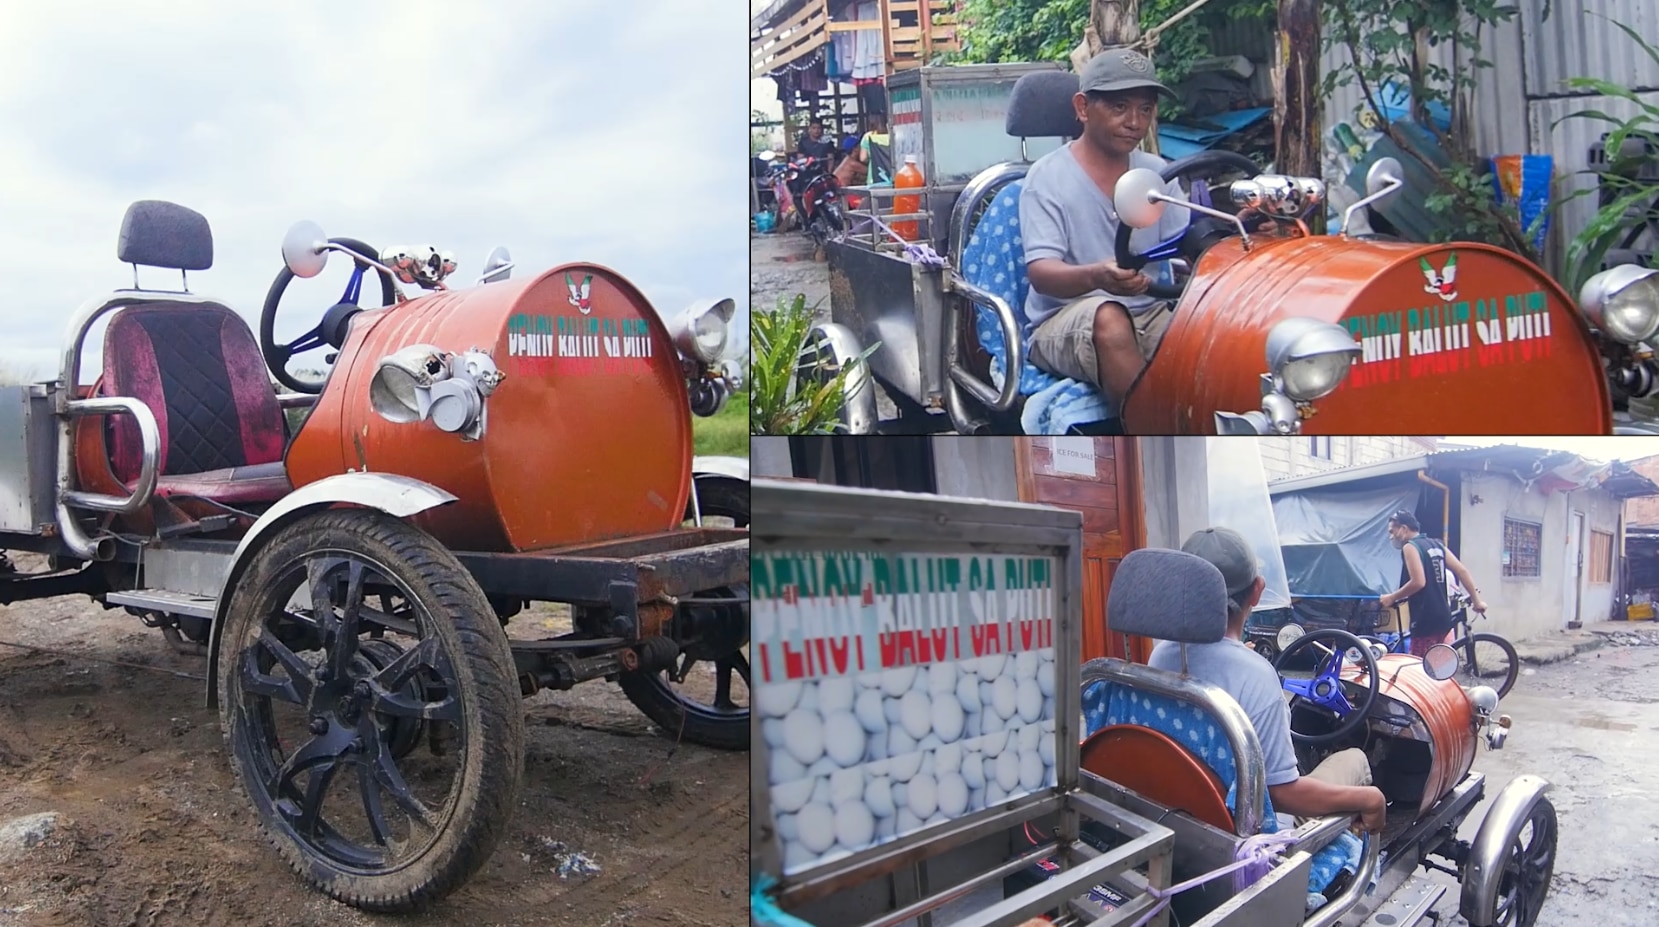 Balut vendor shows off ‘drum car’ invention in Noli’s “KBYN: Kaagapay Ng Bayan”